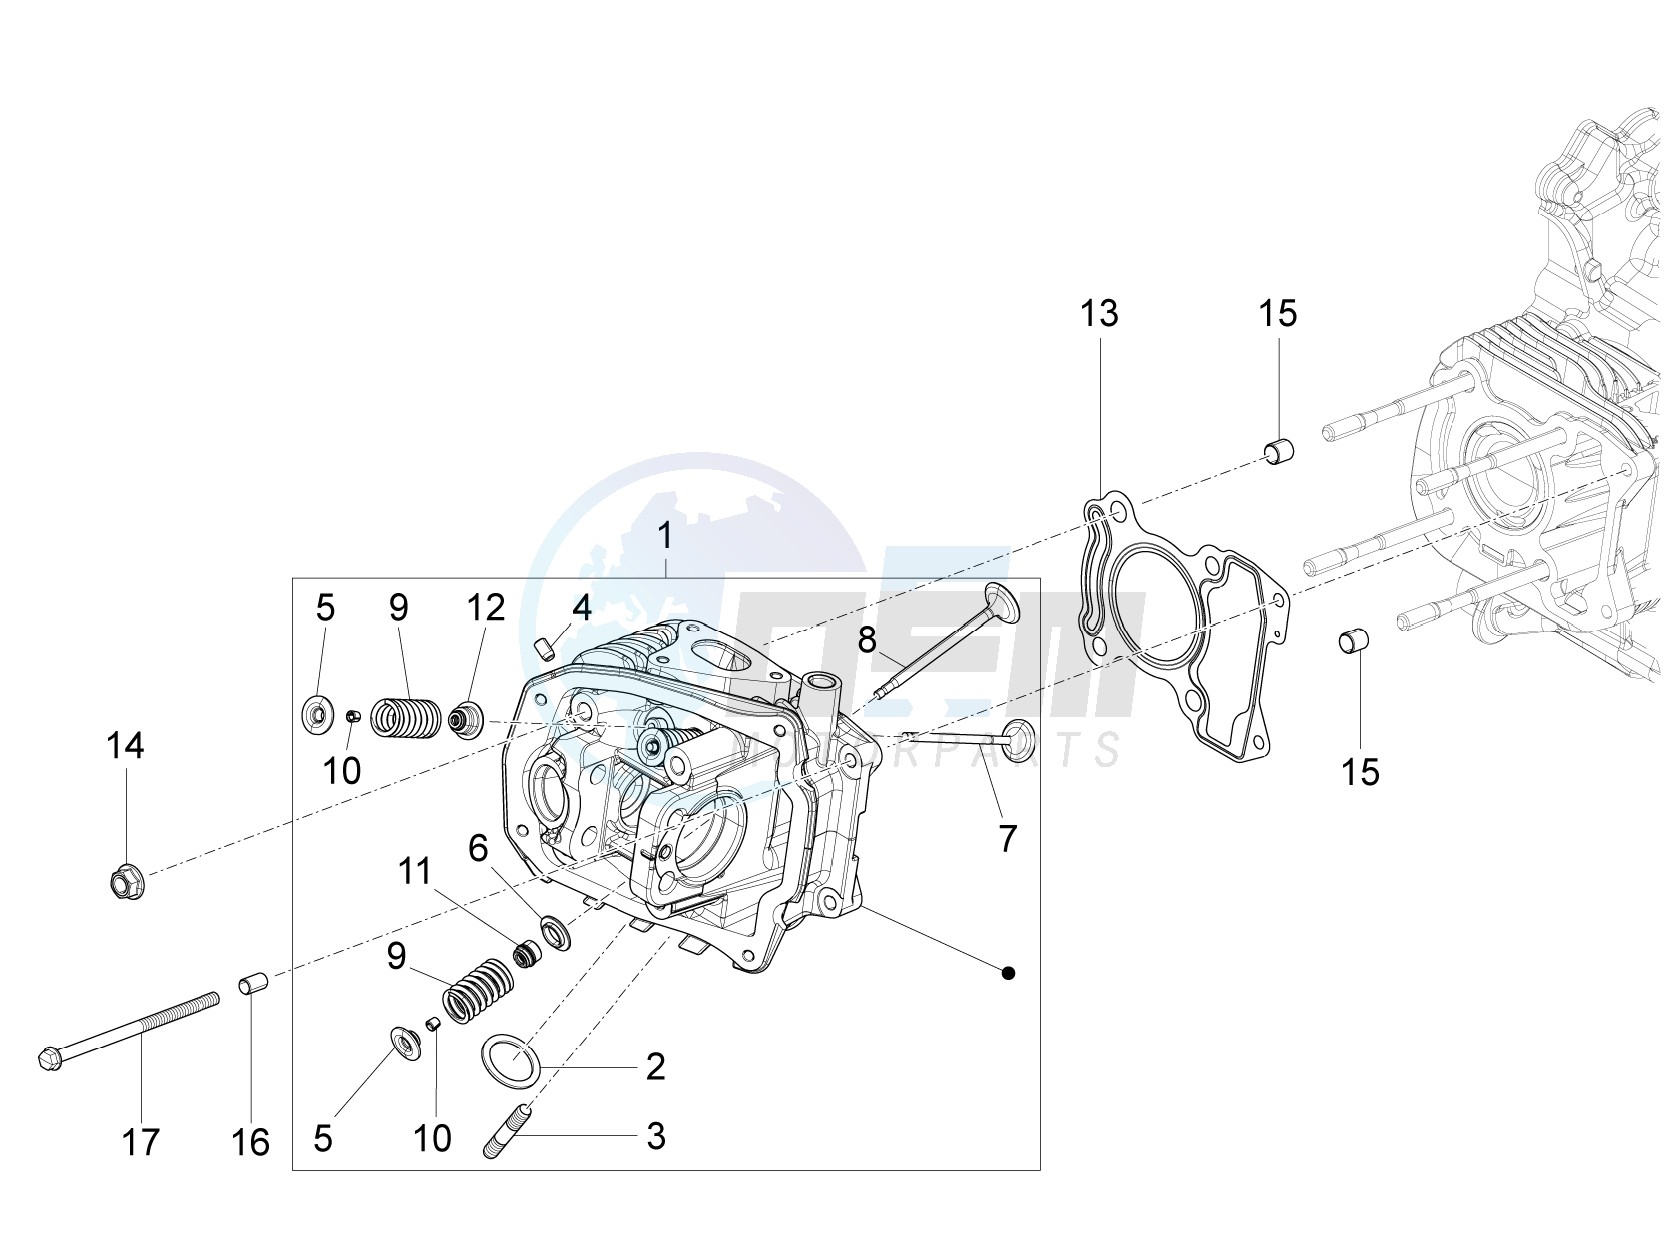 Cilinder head unit - Valve blueprint